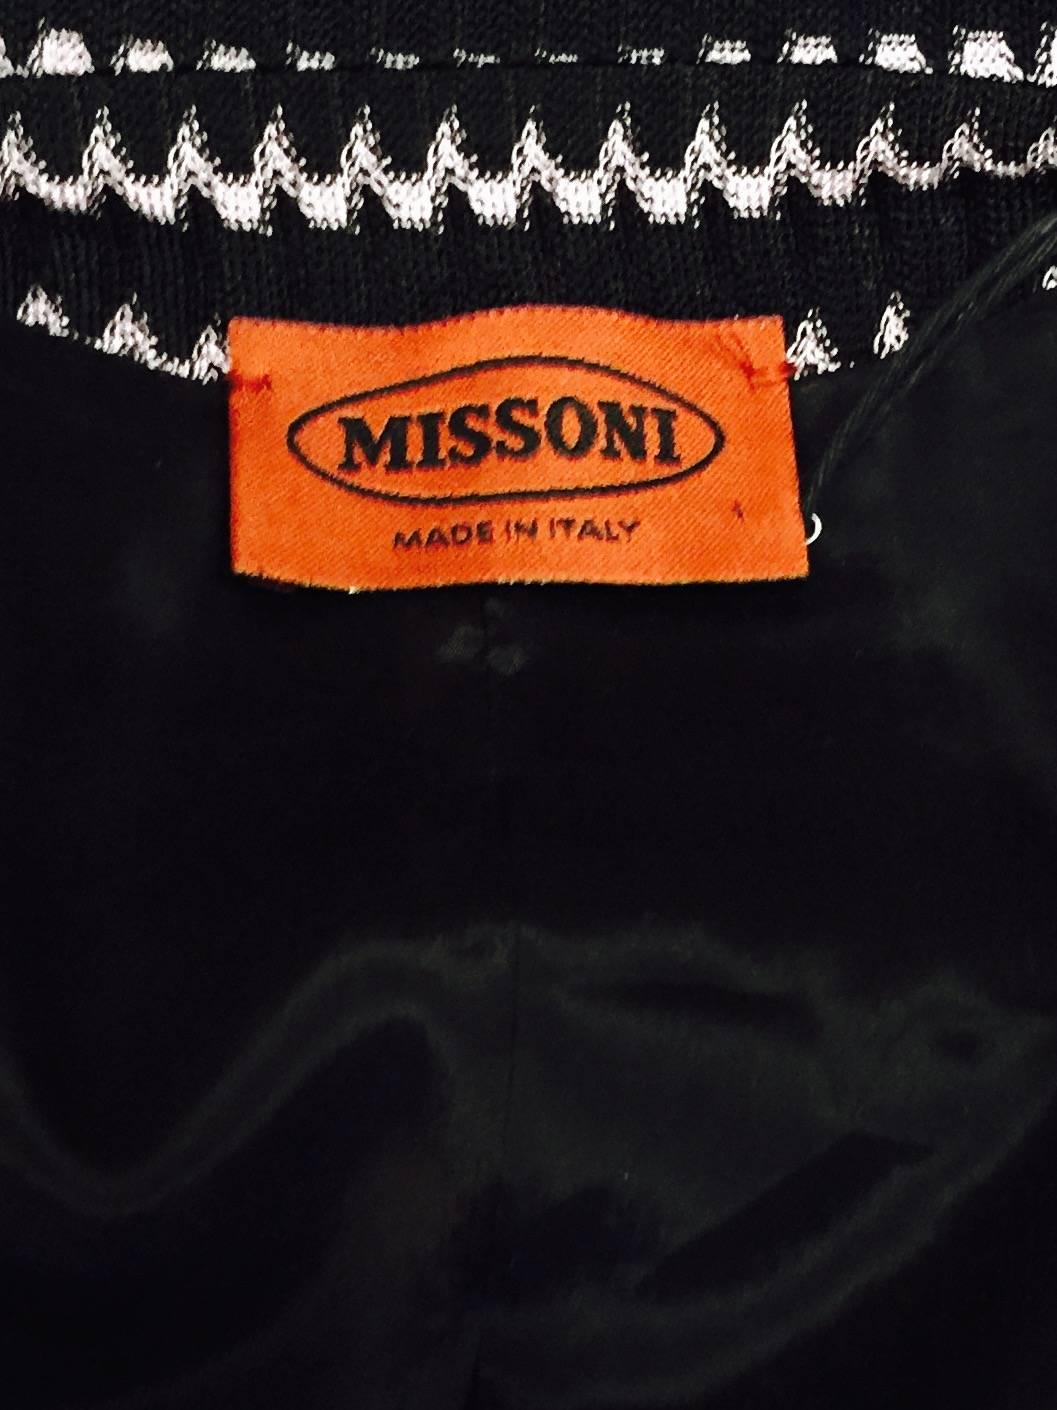 Missoni Multi-Colored Zig Zag Pattern Knit Blazer With Peaked Lapels  2